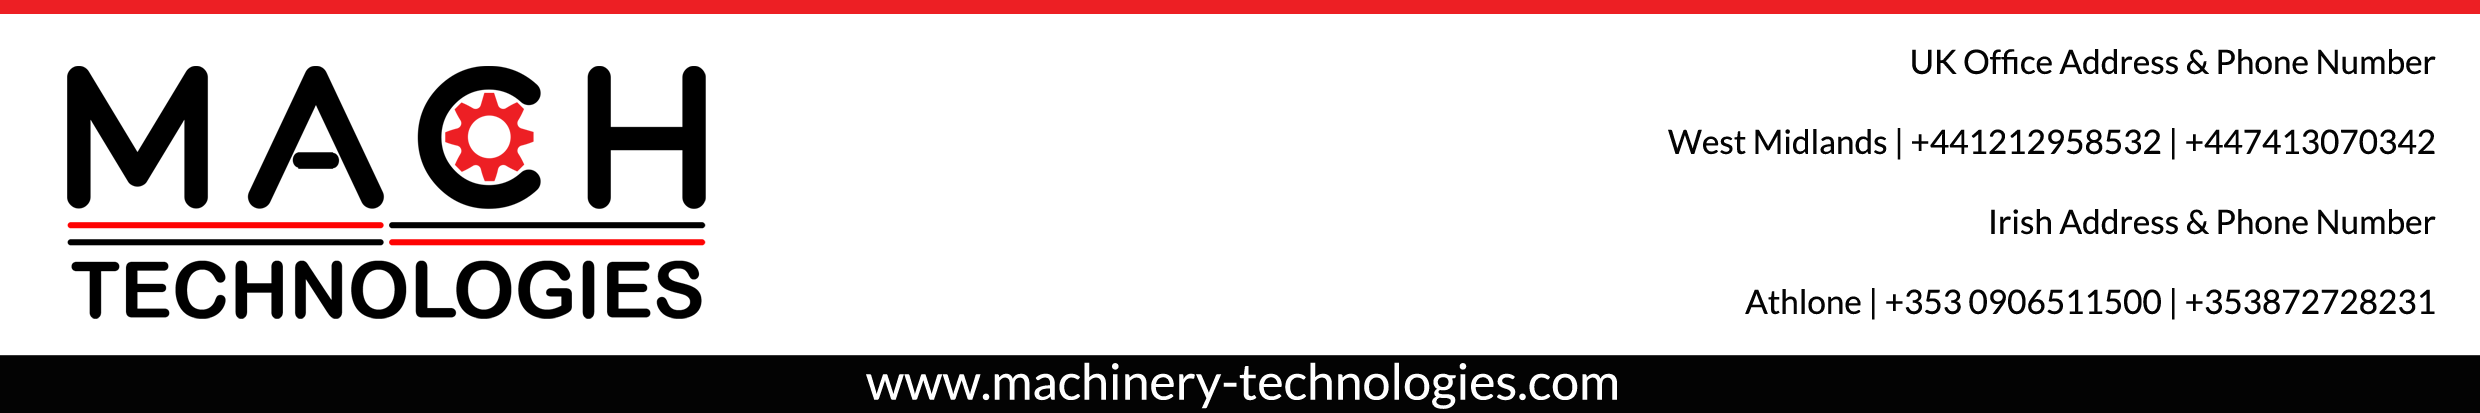 Mach Technologies UK CNC Tube details